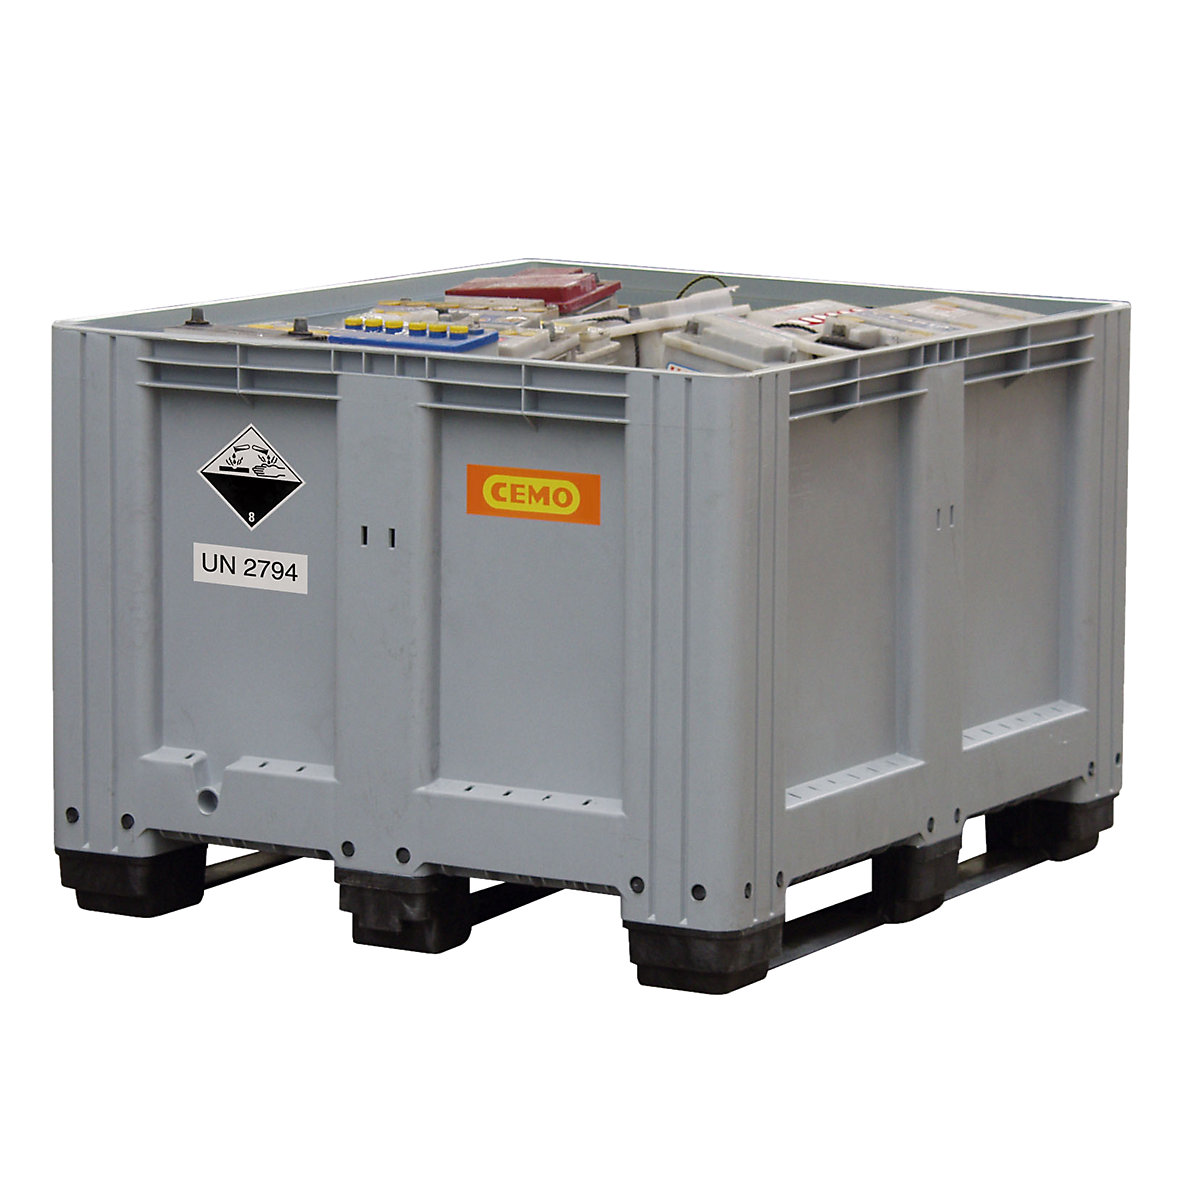 Altbatterie-Lager- und Transportbox CEMO